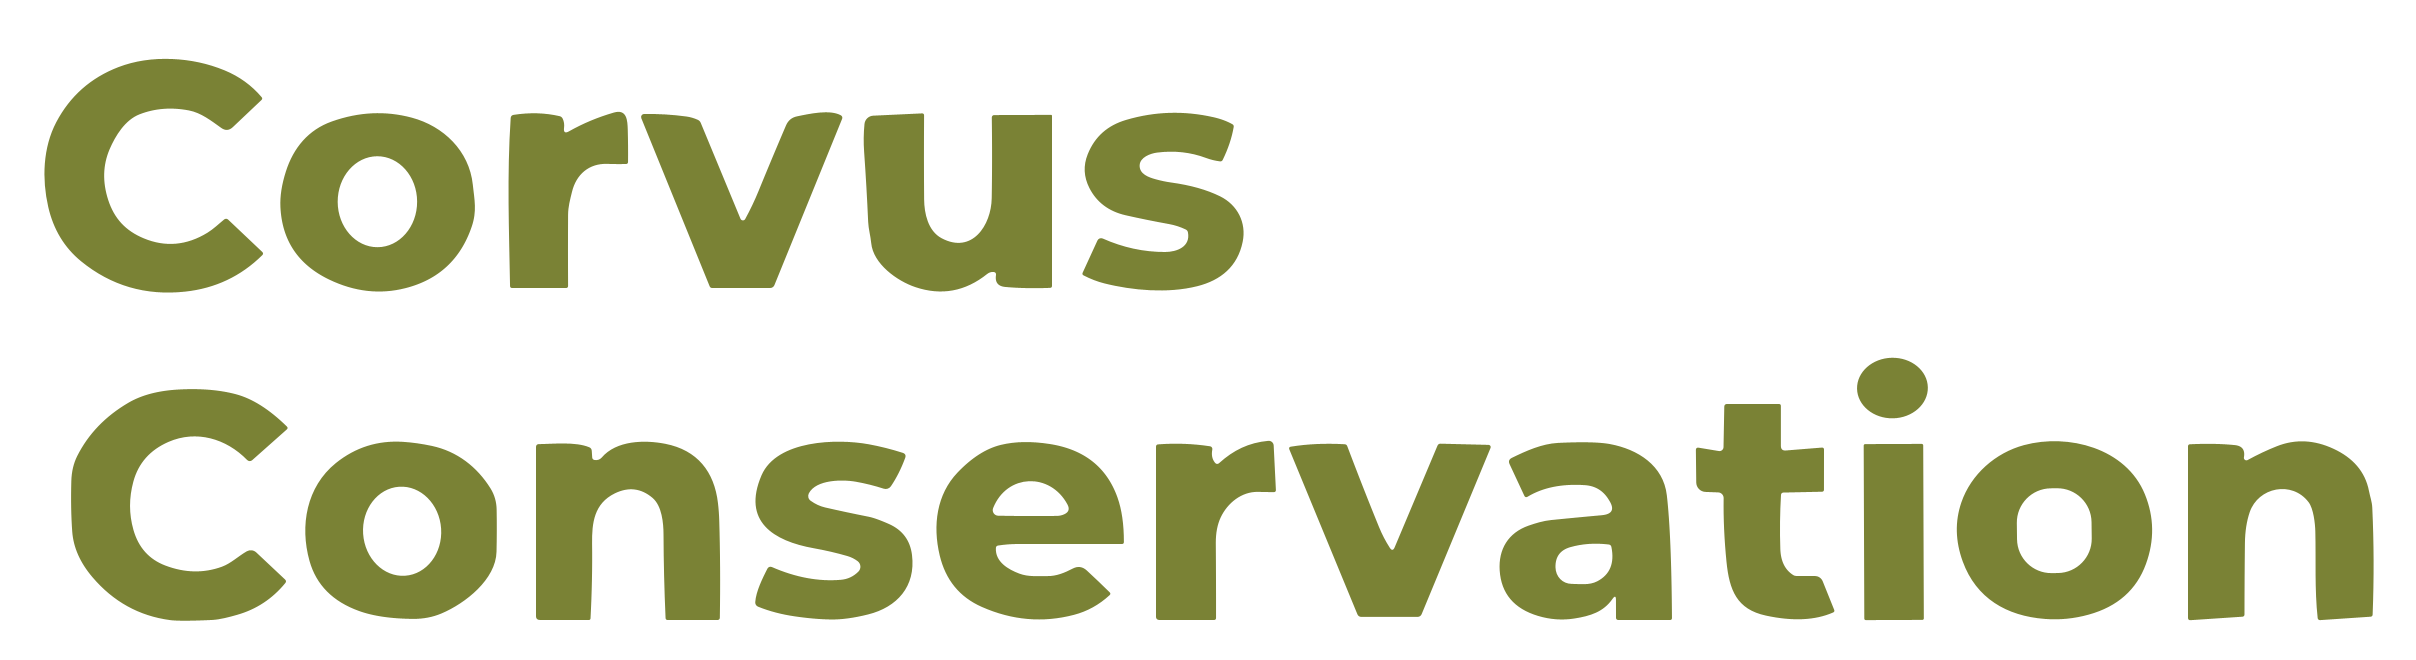 Logo for Corvus Conservation on a transparent background